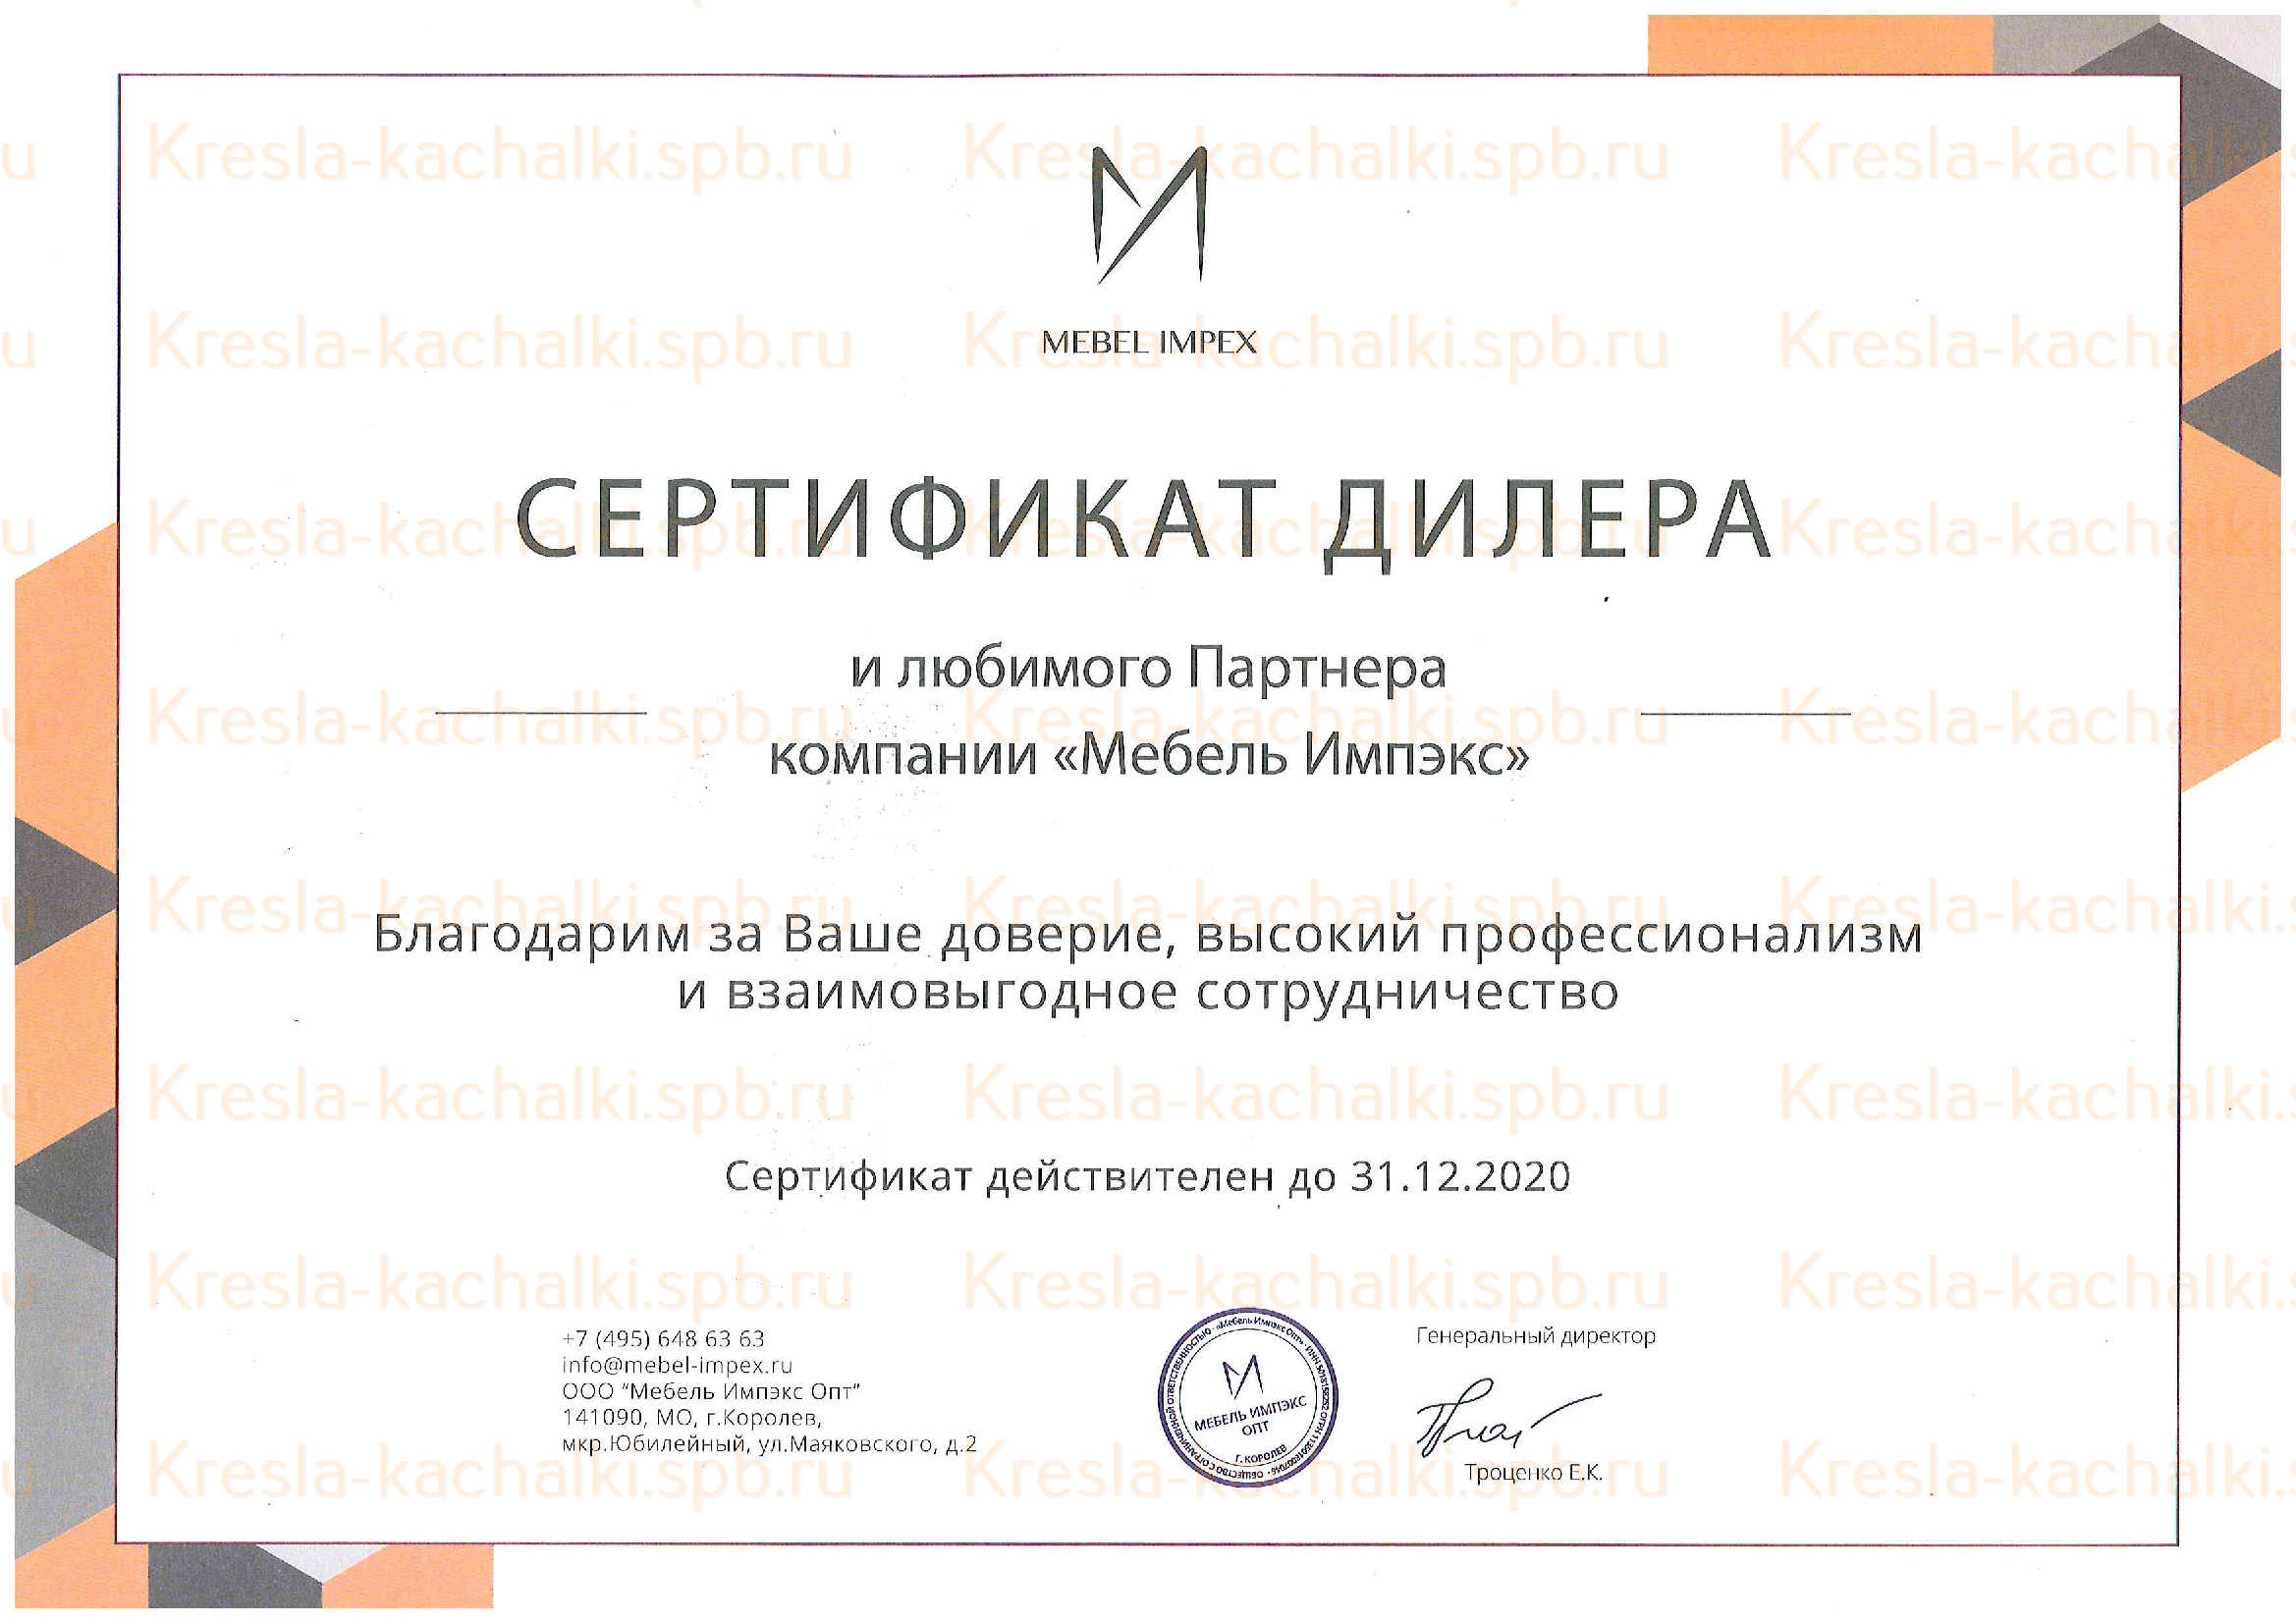 Сертификат дистрибьютора 